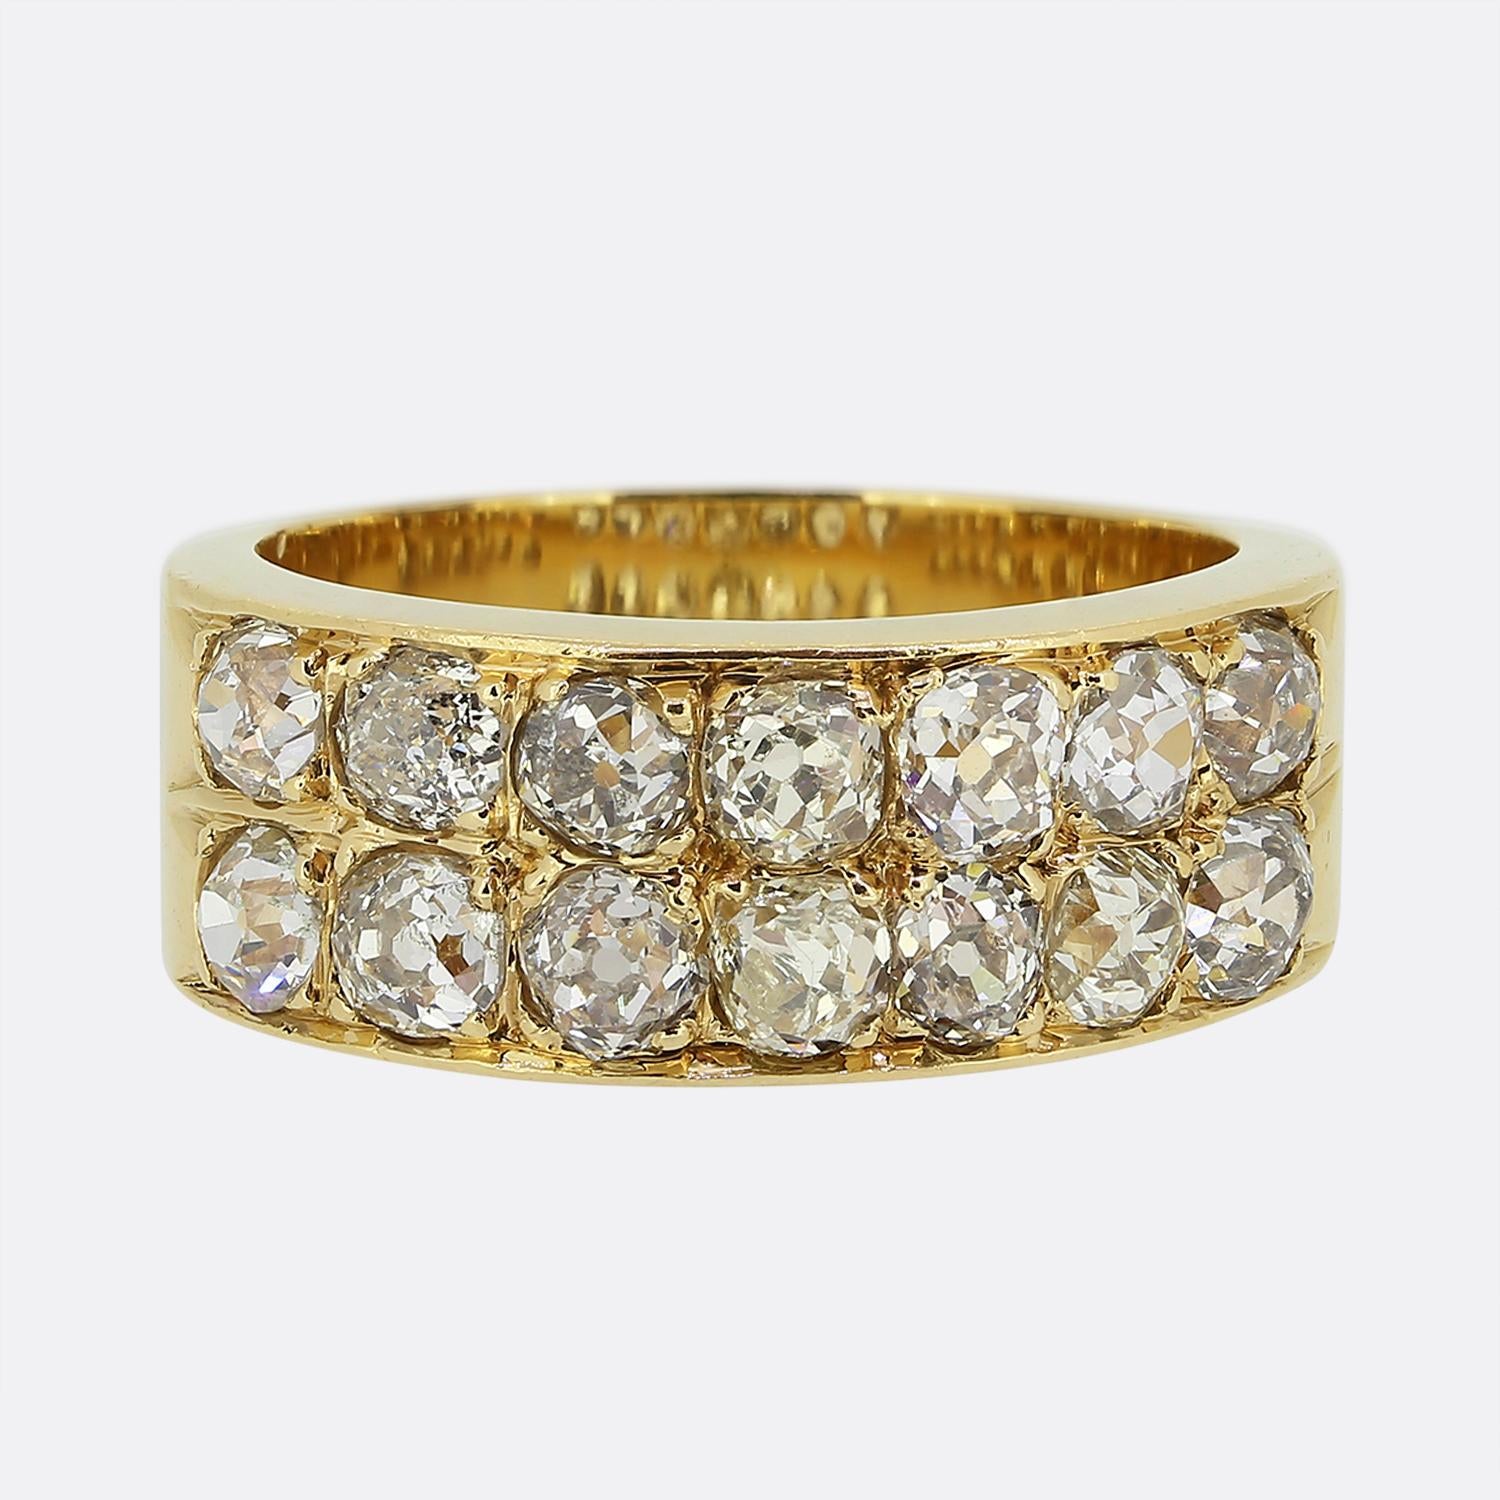 Antique Two-Row Diamond Ring